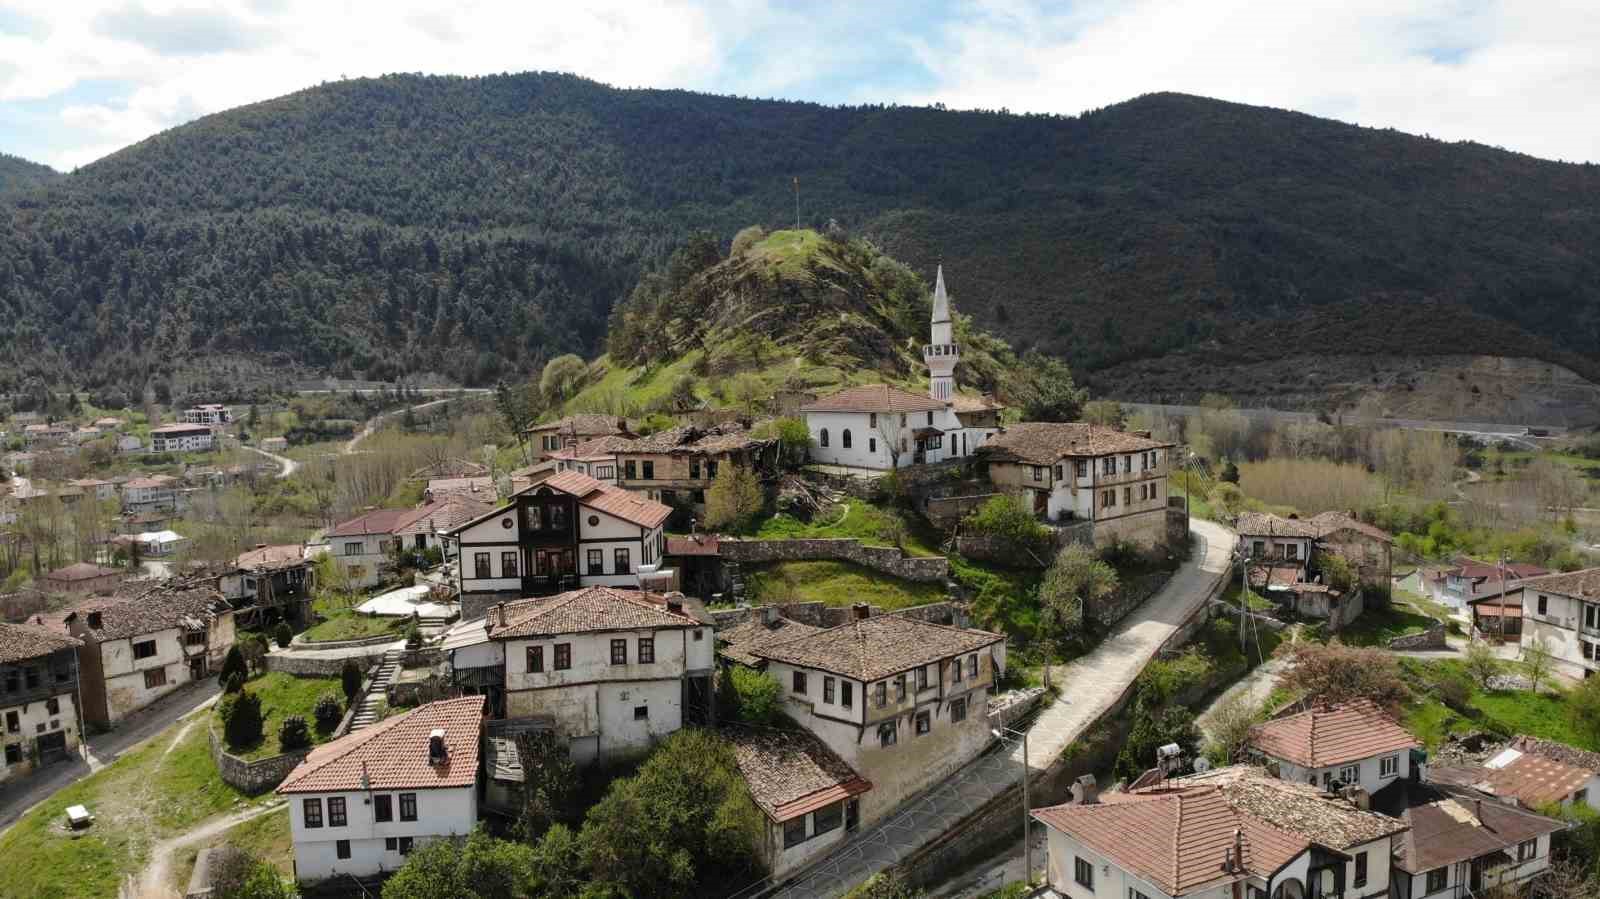 osmanlinin ilk fethettigi topraklardaki bu evler gorenleri tarihi yolculuga cikariyor 0 uQqz2Kap